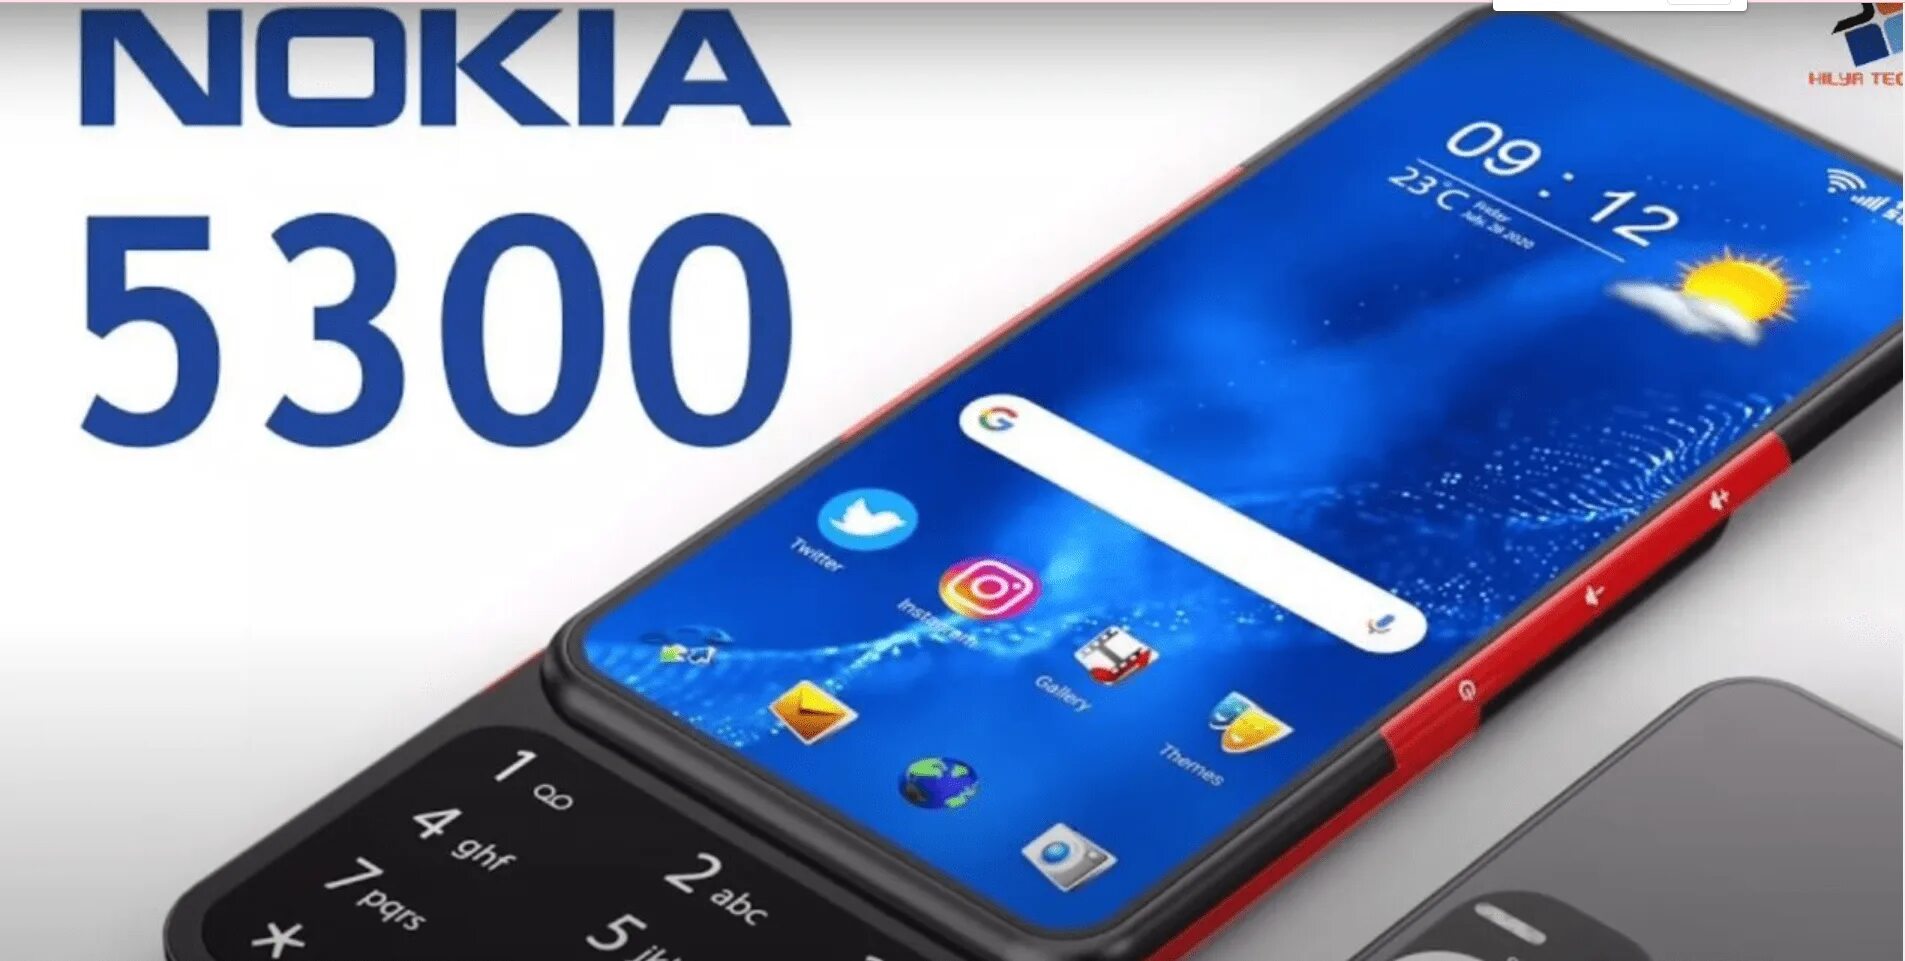 5300 5g. Нокиа 5300. Nokia Android 2016 до 2021 года. Nokia 5300 5g цена. Нокия 7610 5g цена в россии купить